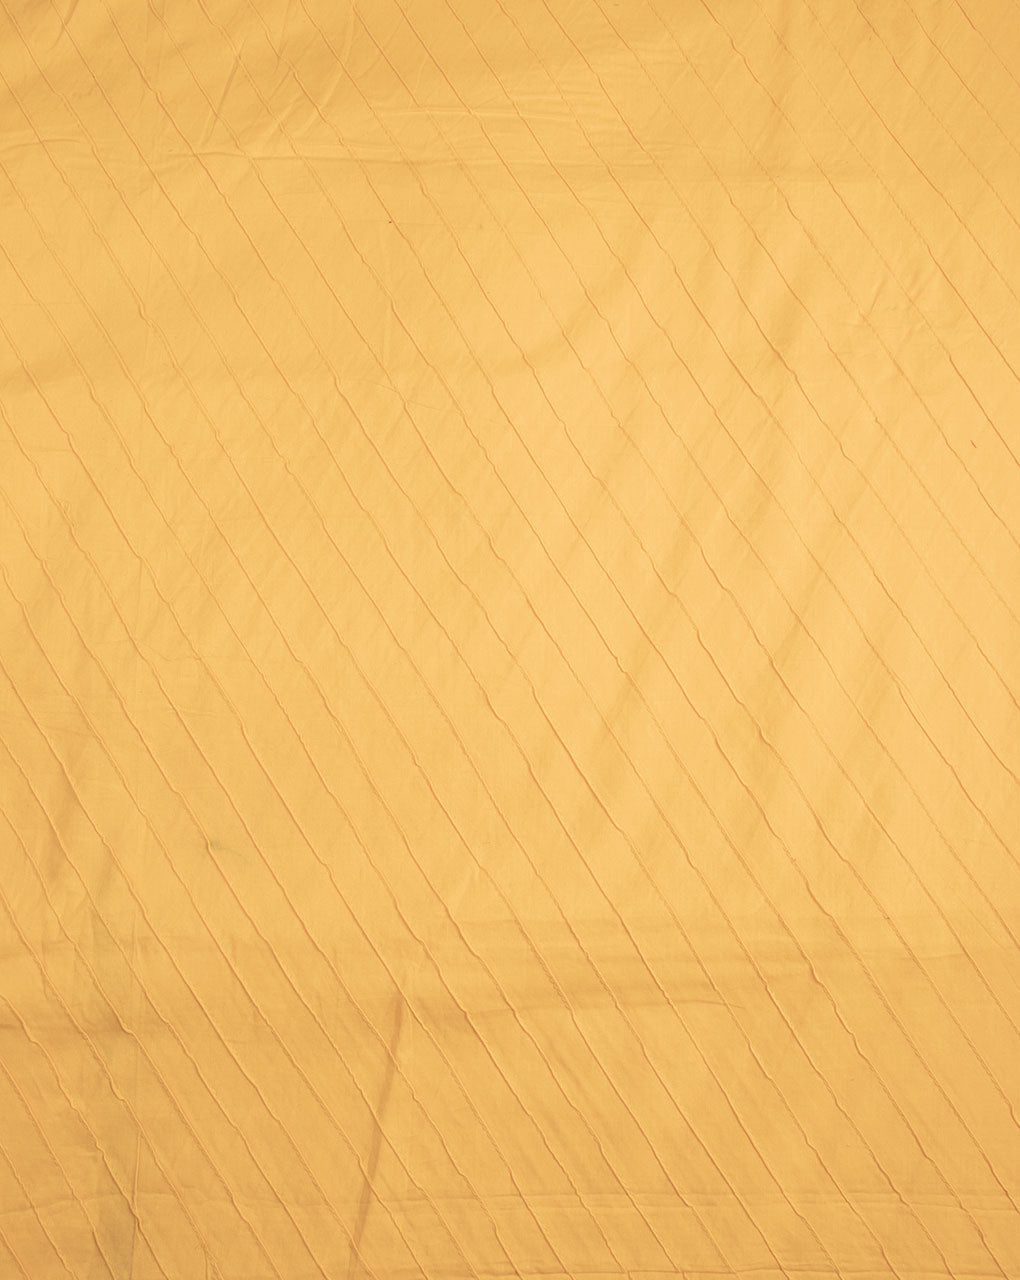 Yellow Pin-Tucks Cotton Fabric ( Width 40 Inch ) - Fabriclore.com